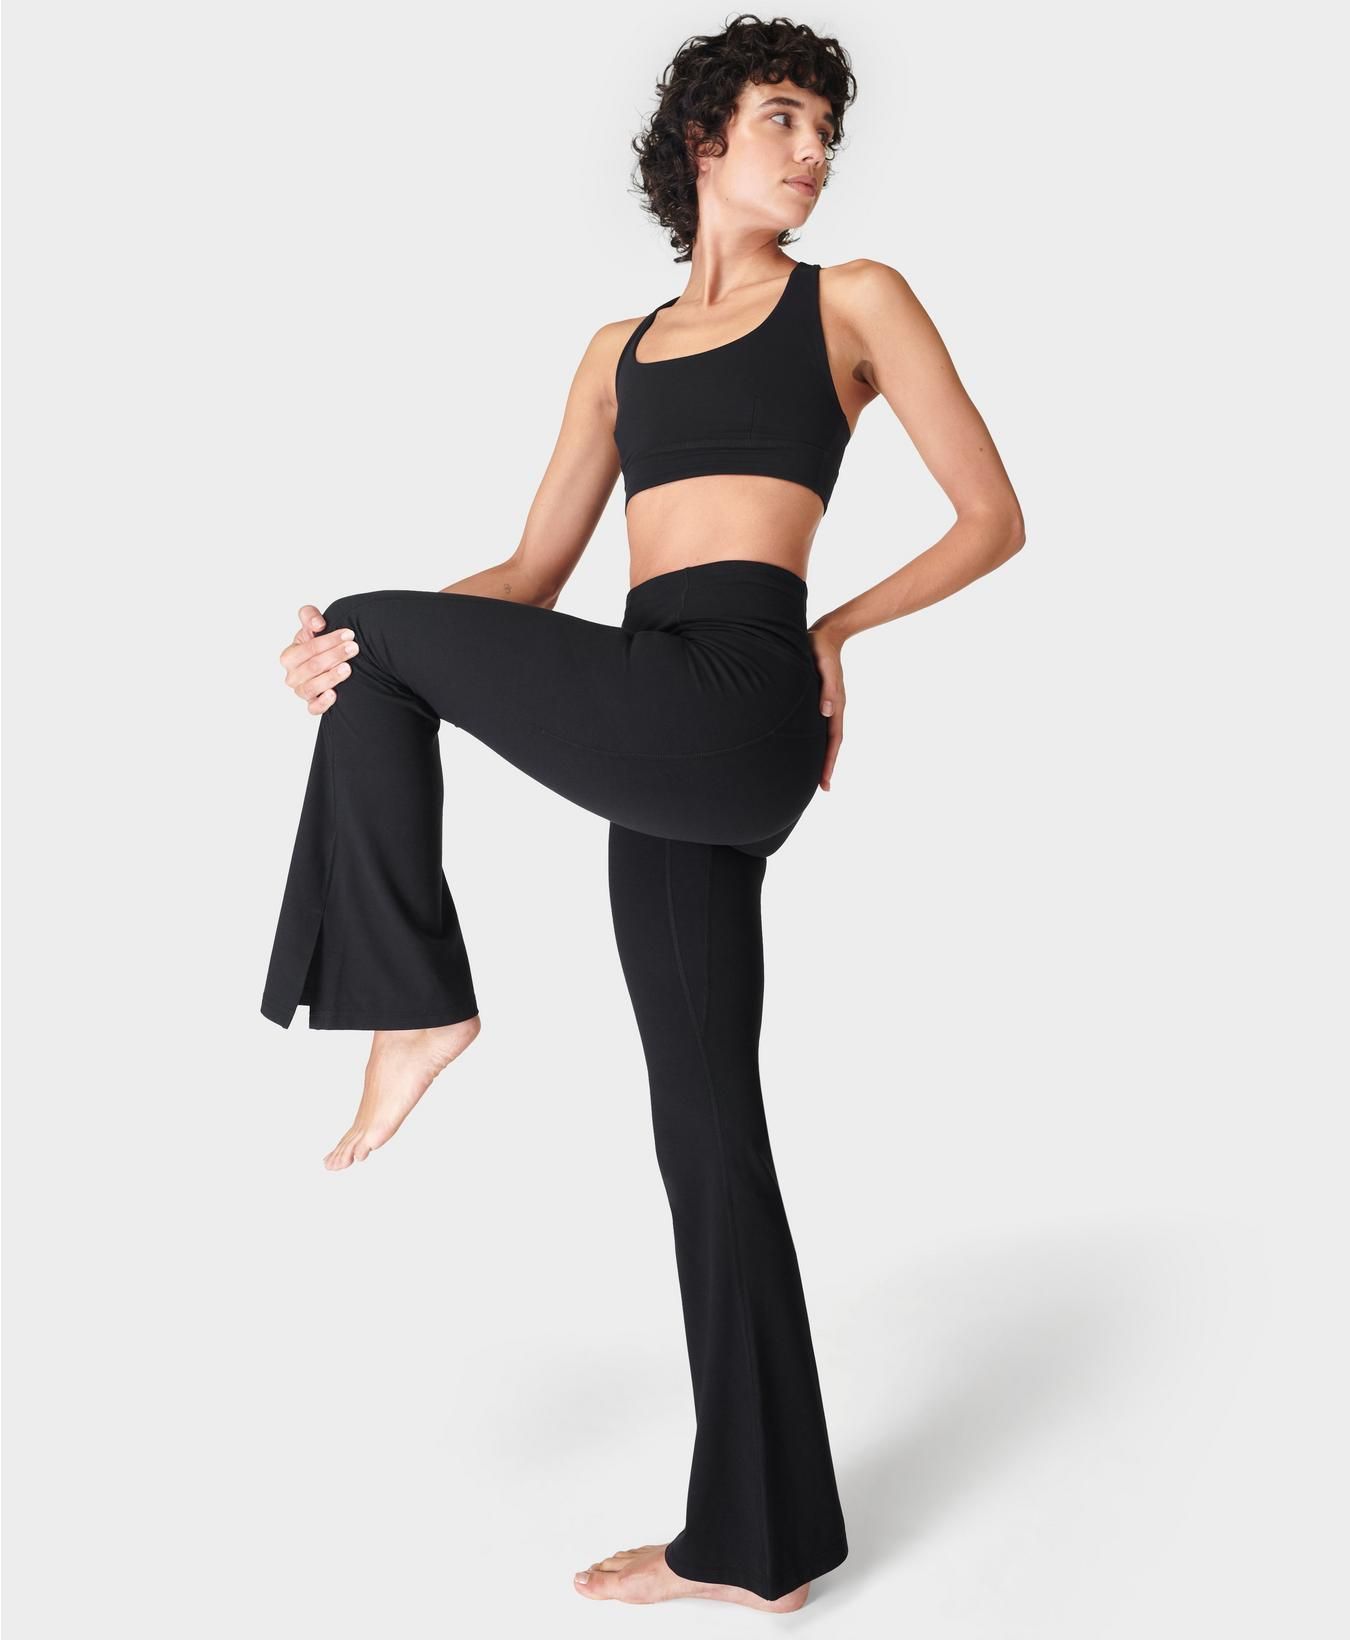 Women Maternity Yoga Pants - Black